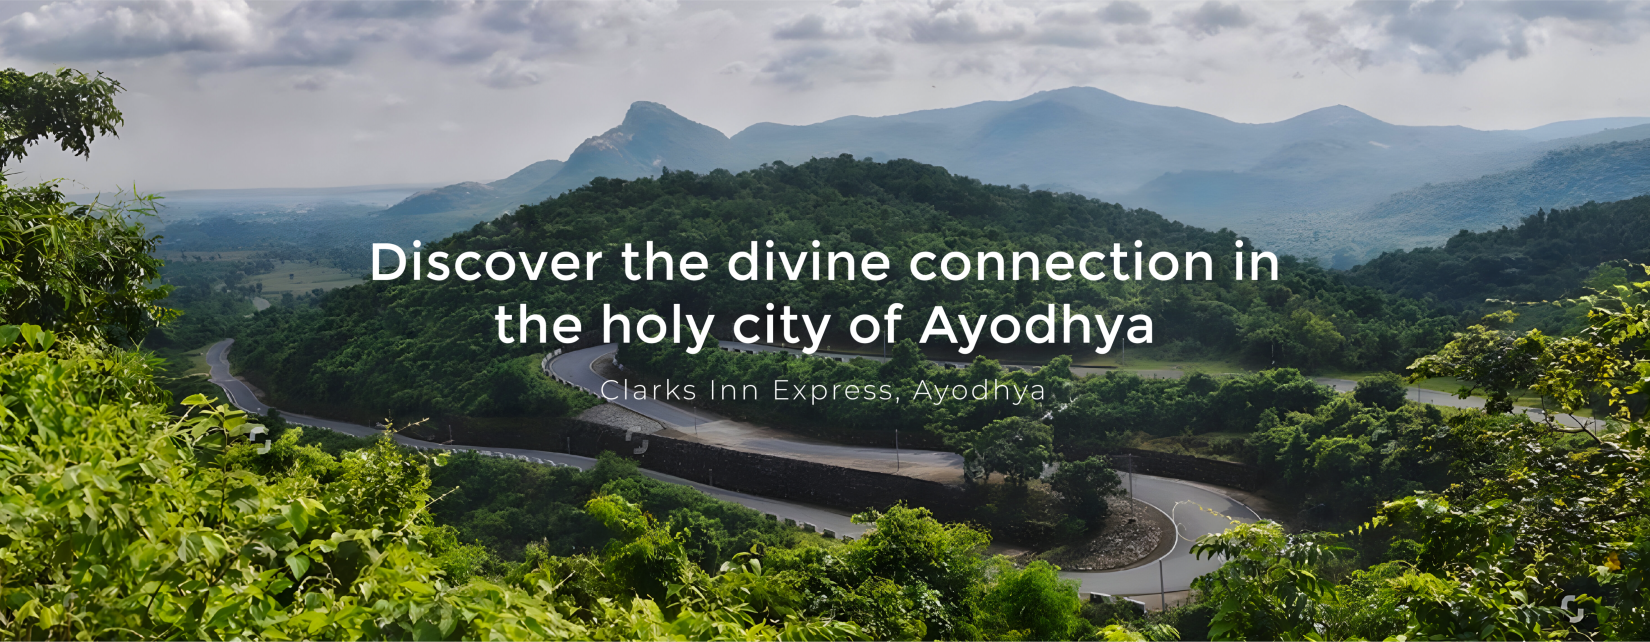 Ayodhya-03